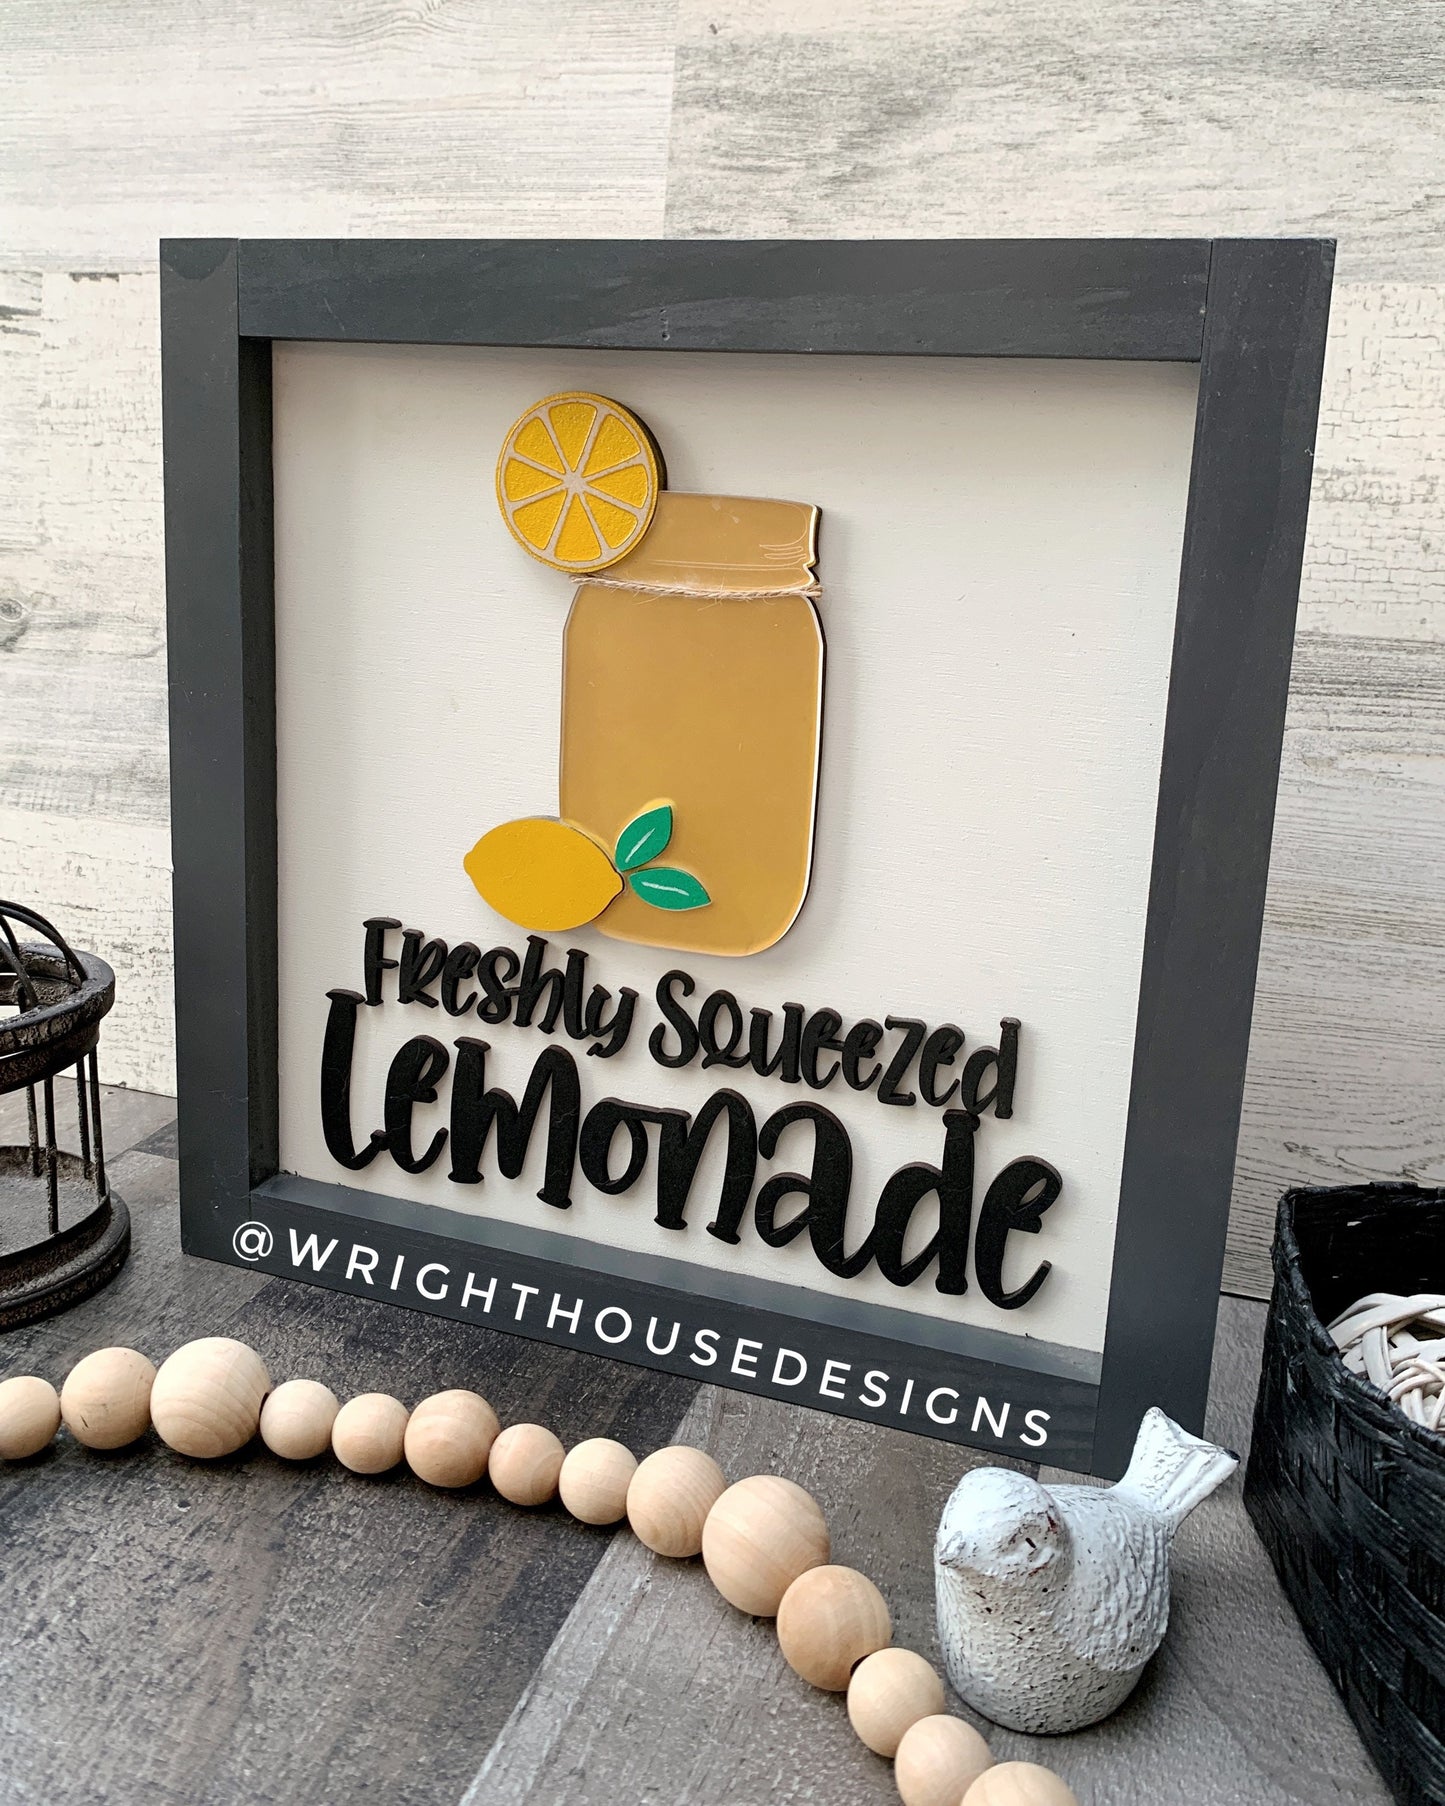 Mason Jar Freshly Squeezed Lemonade Shelf Sitter Round - Farmhouse Sign Making and DIY Kits - Cut File For Glowforge - Digital SVG File